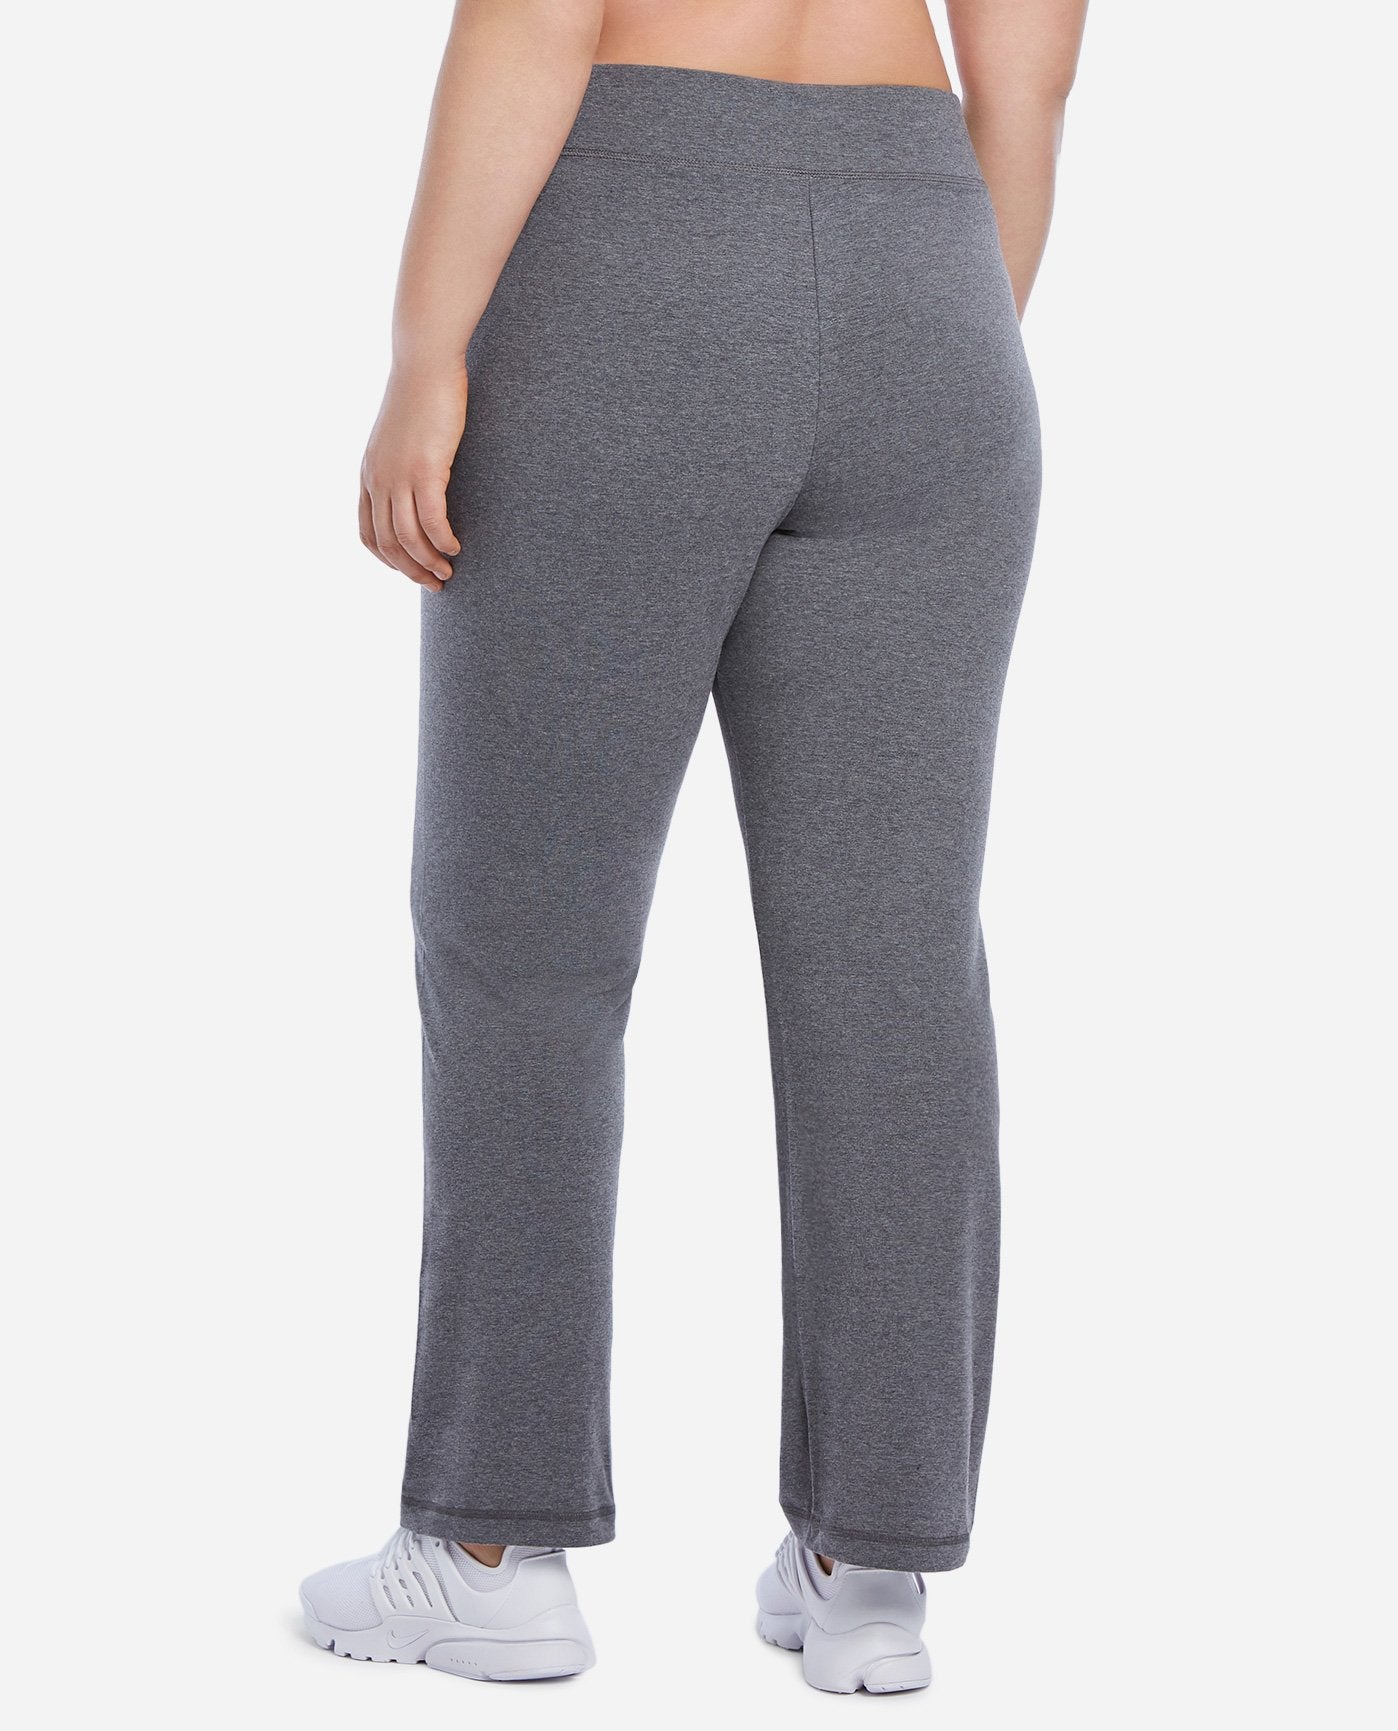 adviicd Yoga Pants Yoga Clothes Women's Workout pants pants Women Dolphin  pants High Waist Yoga Pants Black 2XL 